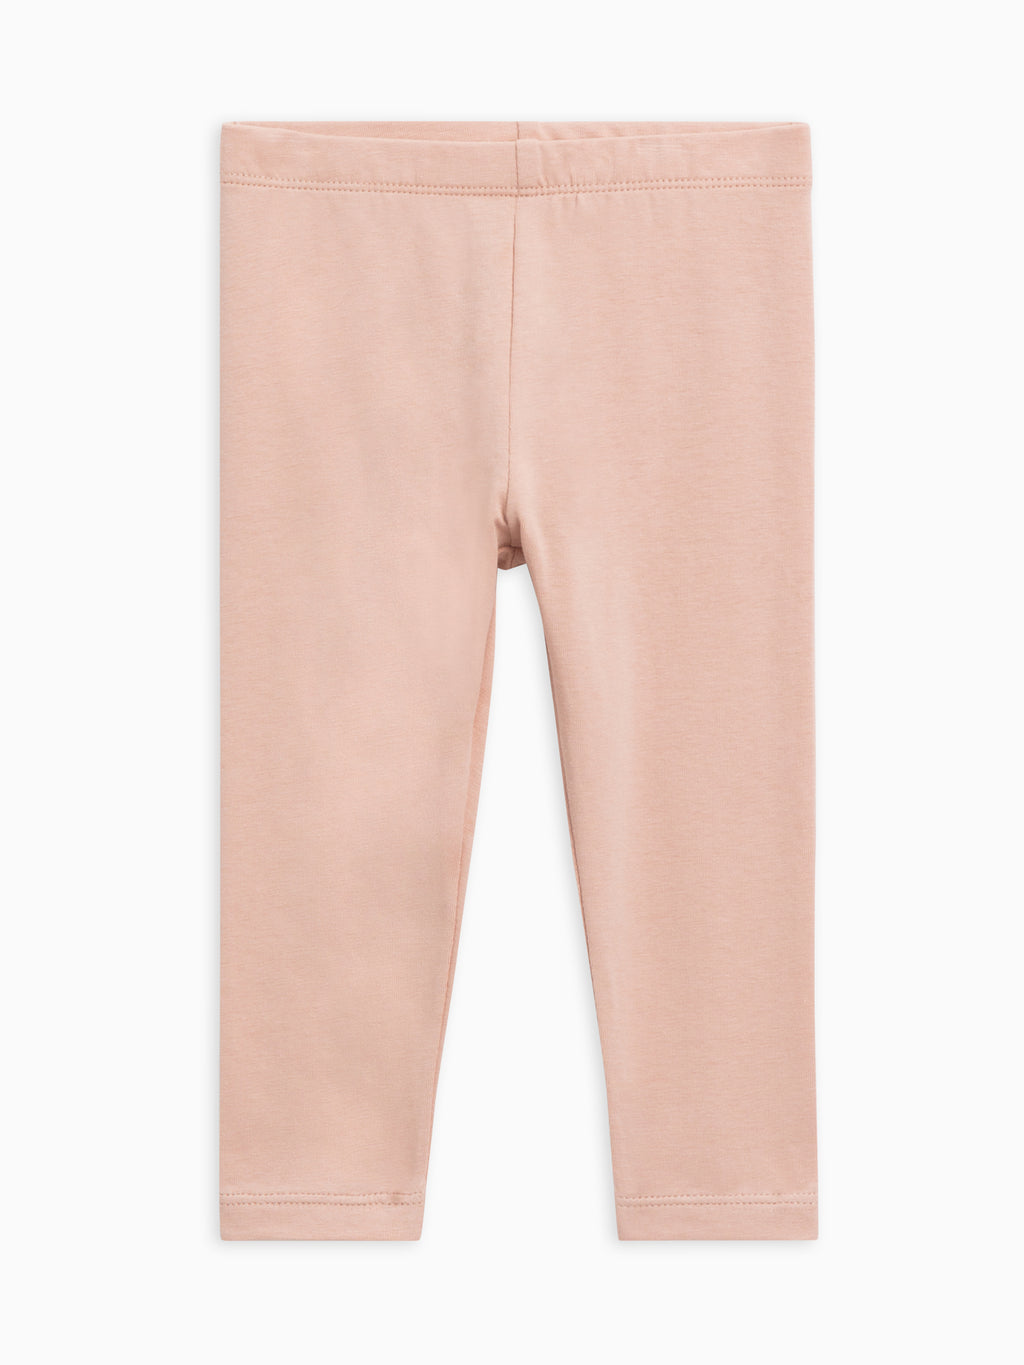 Buy Women's Straight Fit Cotton Leggings (Legi-01_Baby Pink_L) at